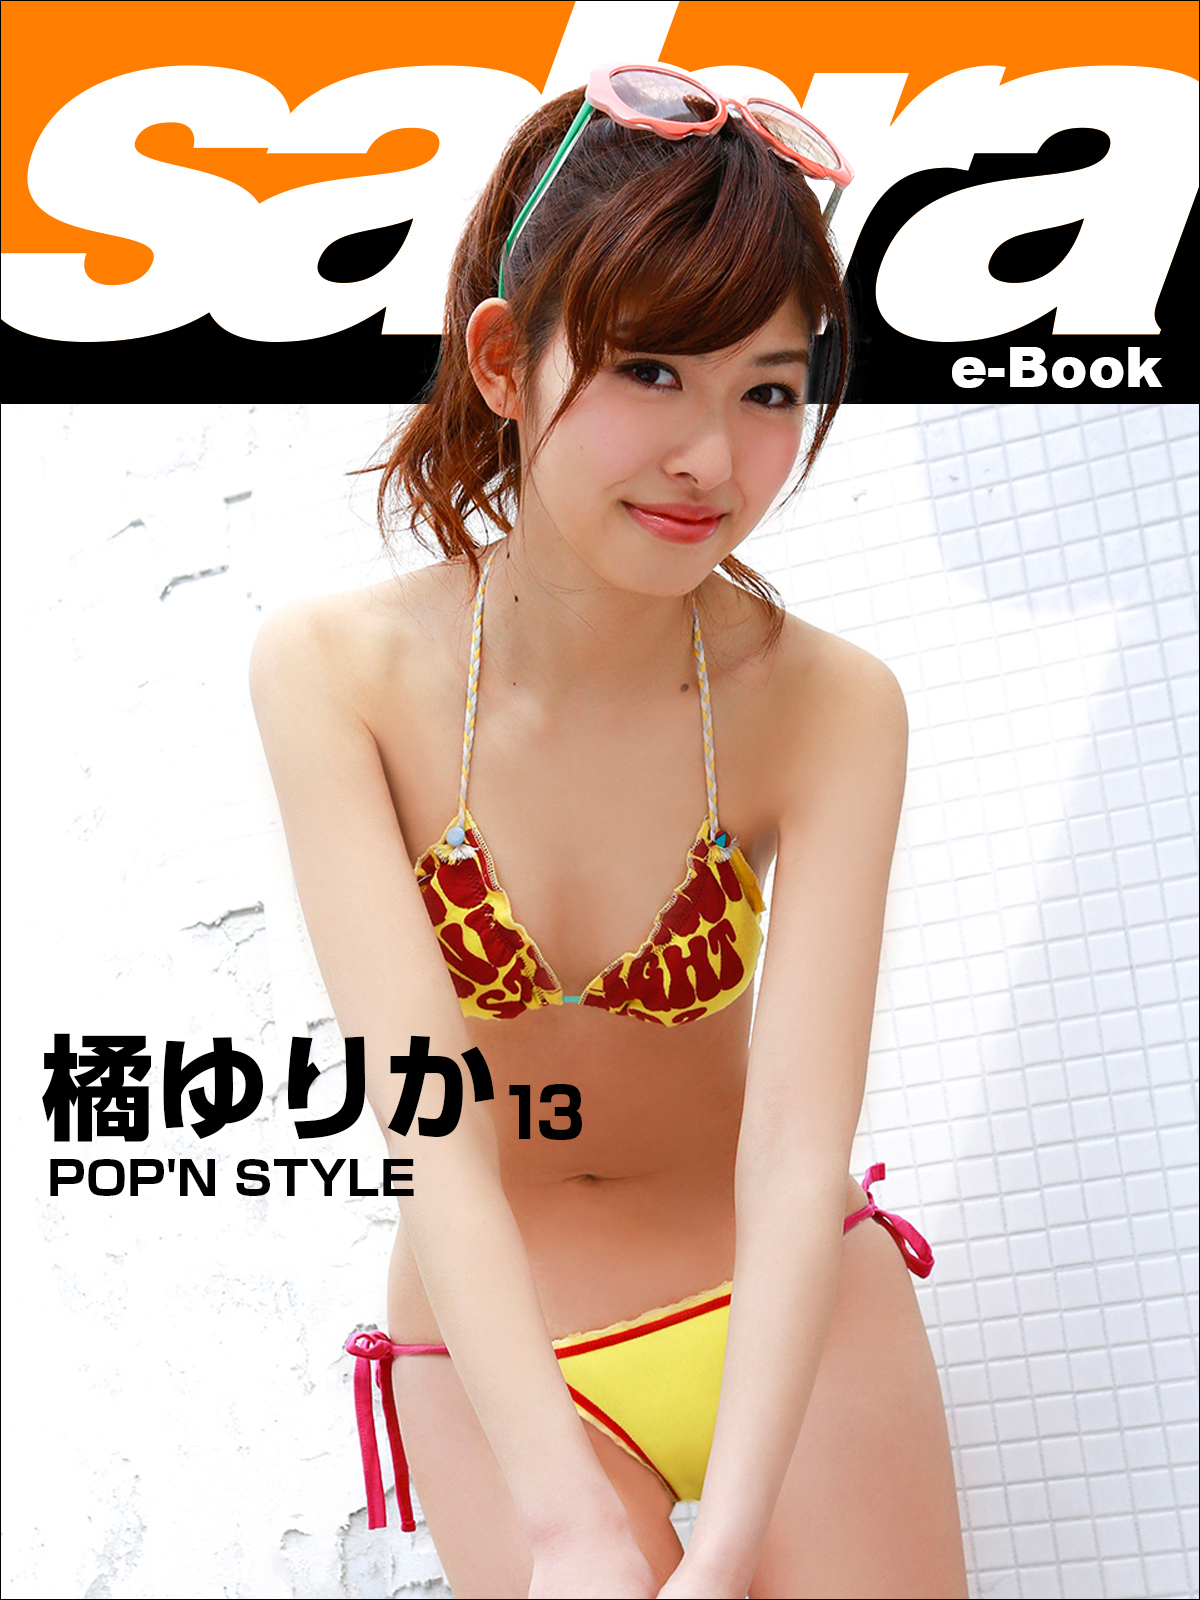 POP'N STYLE 橘ゆりか13 [sabra net e-Book](写真集) - 電子書籍 | U-NEXT 初回600円分無料